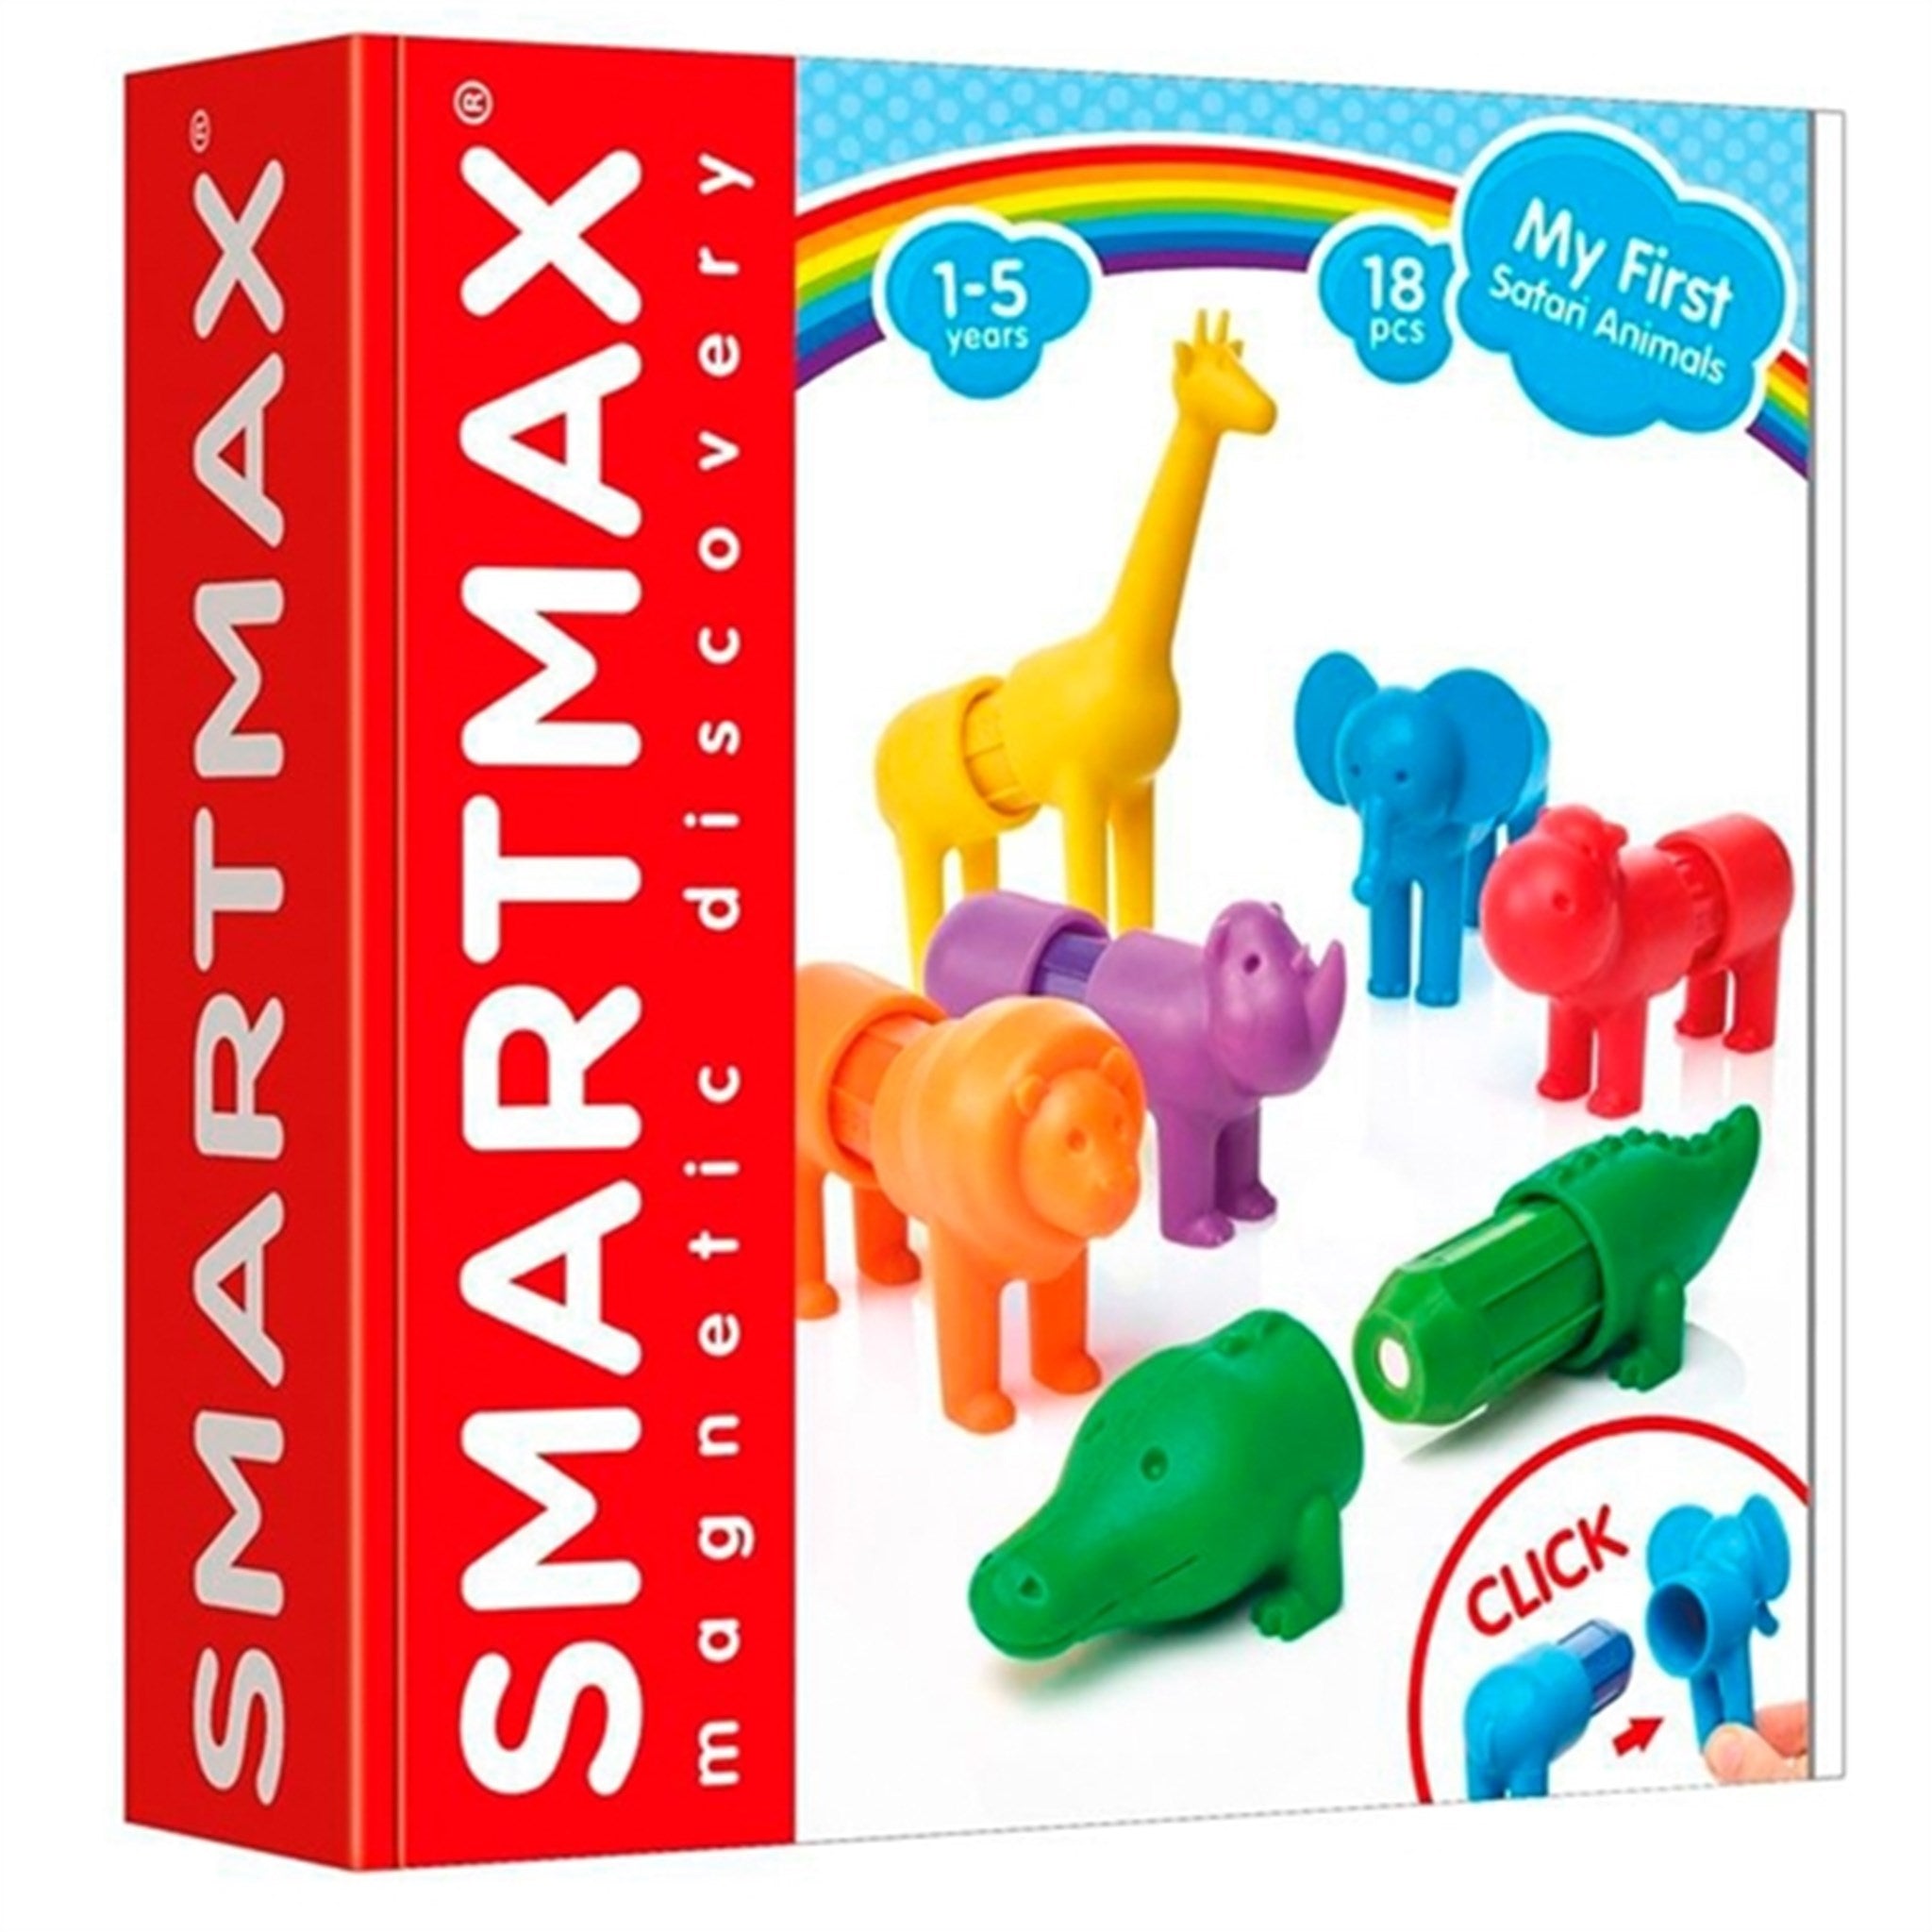 SmartMax My First Safari Animals